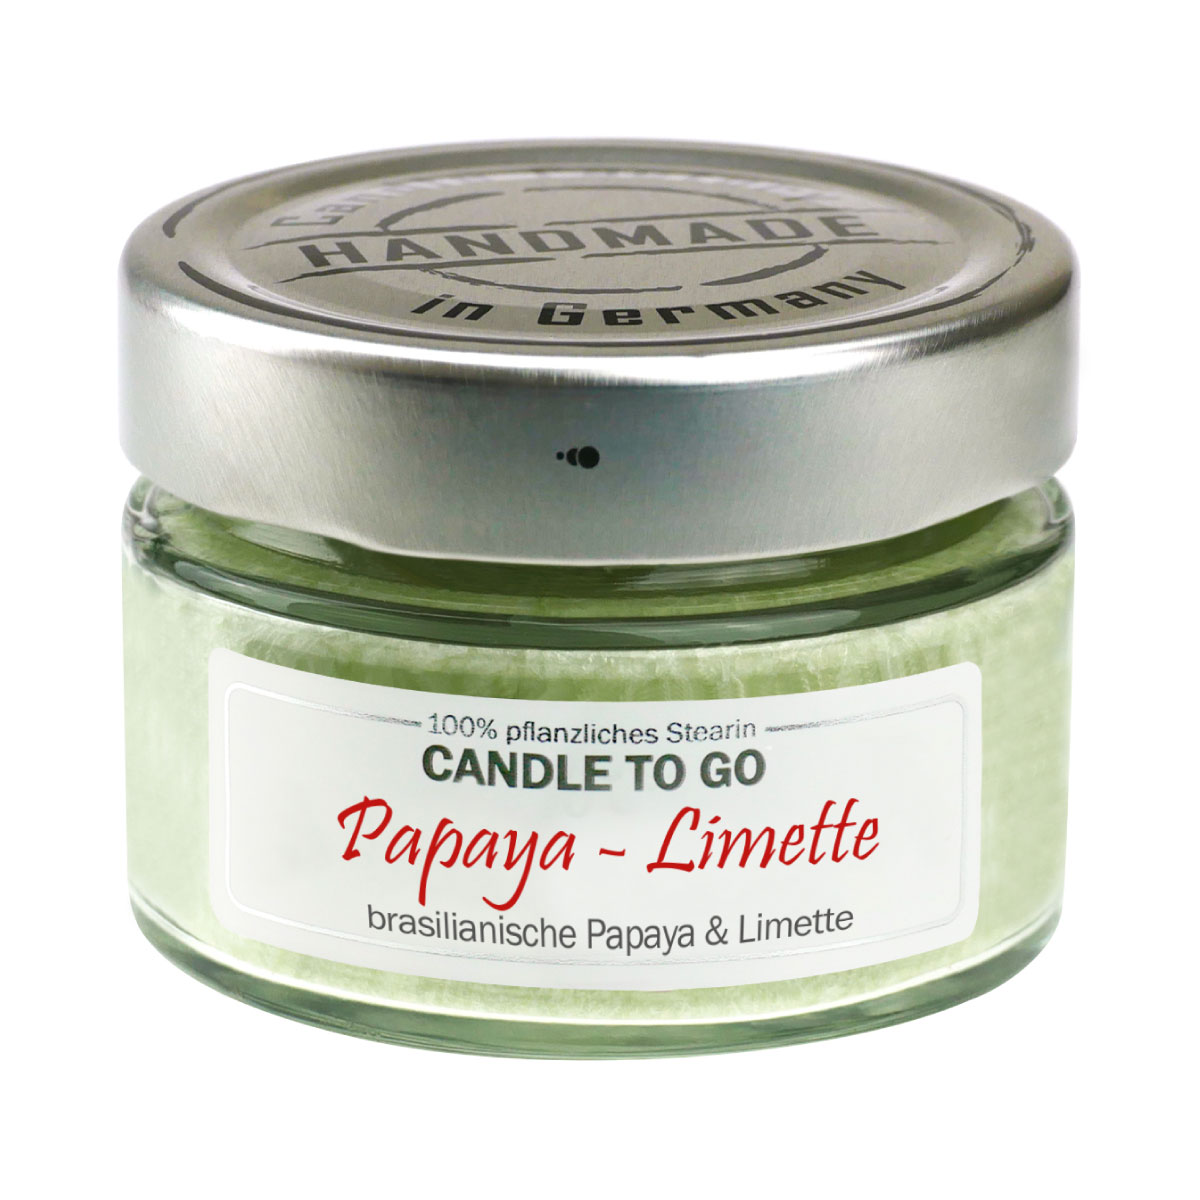 Papaya Limette - Candle to Go Duftkerze von Candle Factory